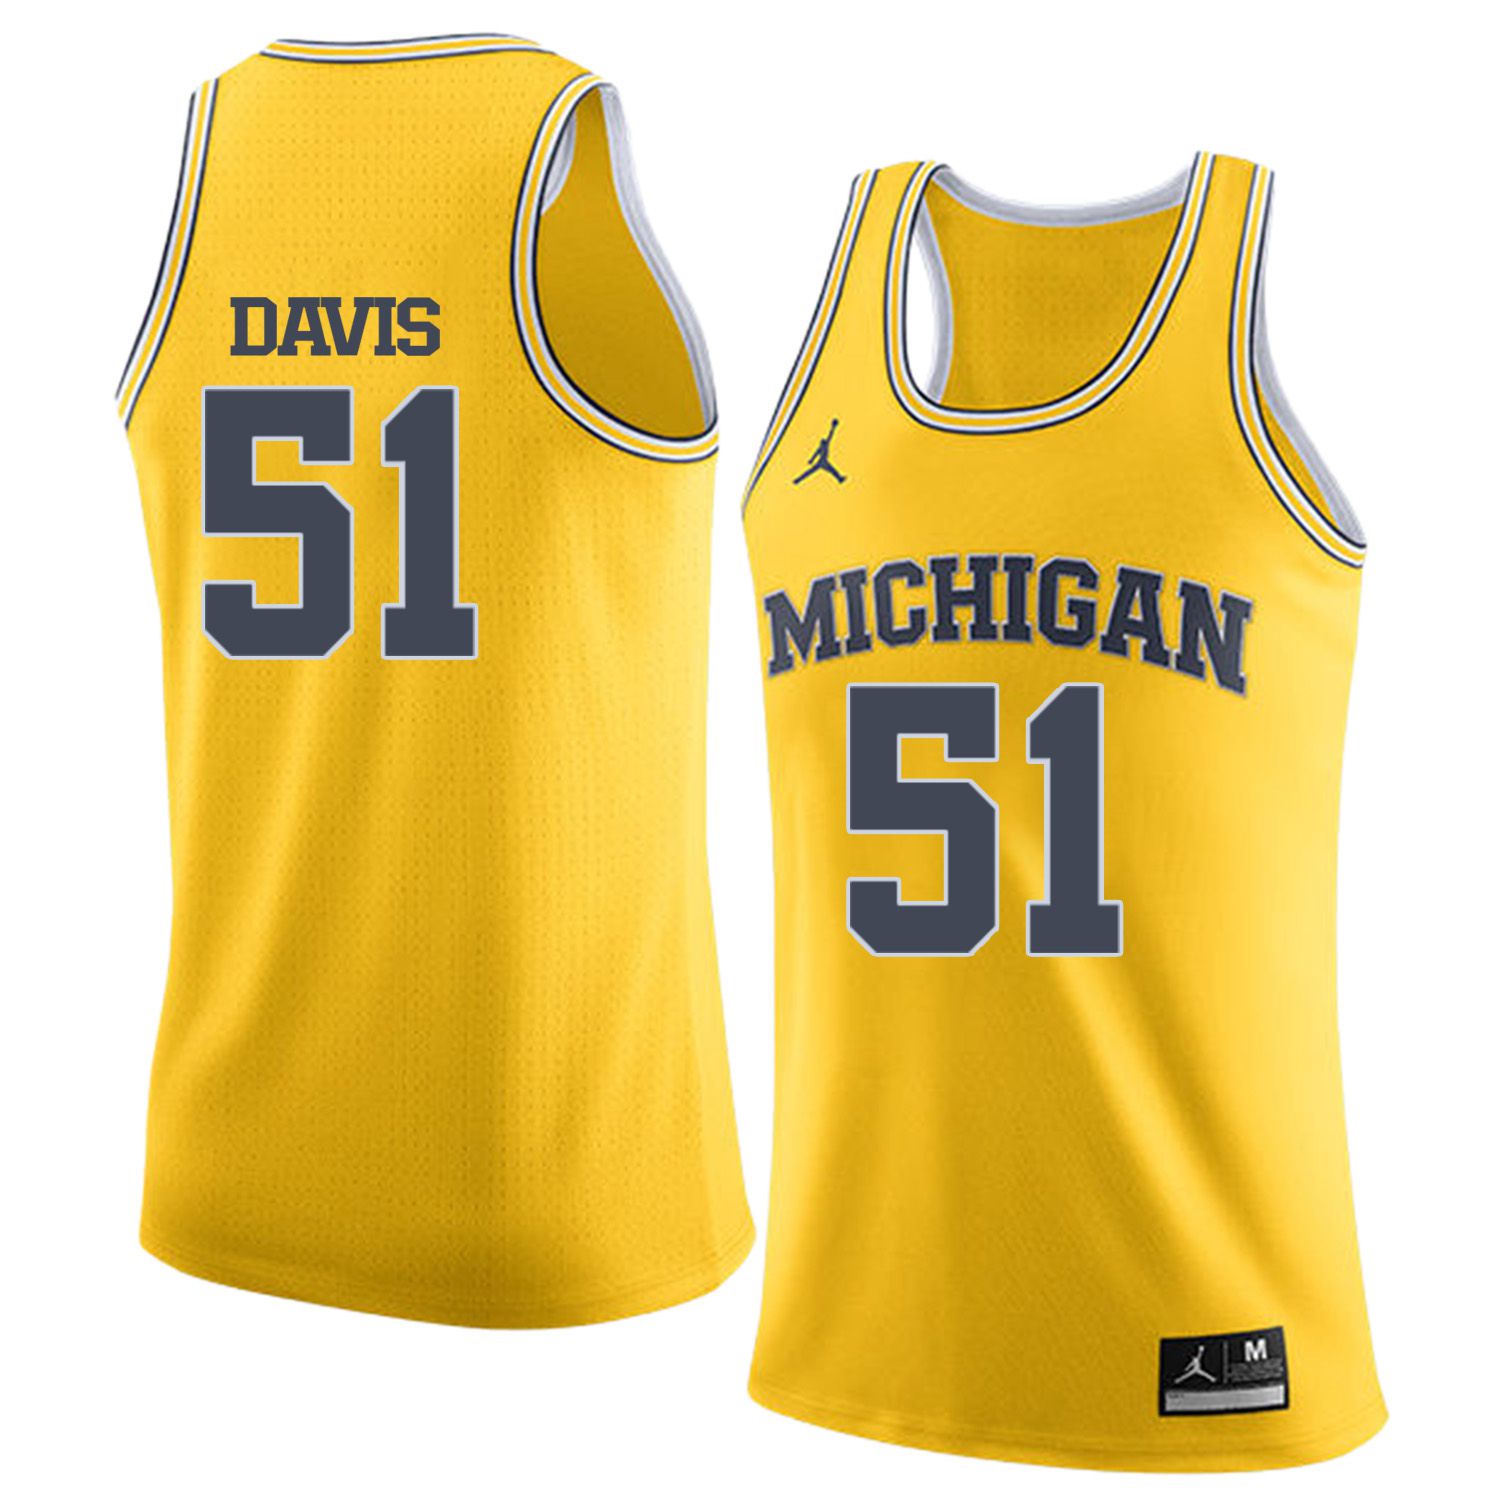 Men Jordan University of Michigan Basketball Yellow #51 Davis Customized NCAA Jerseys